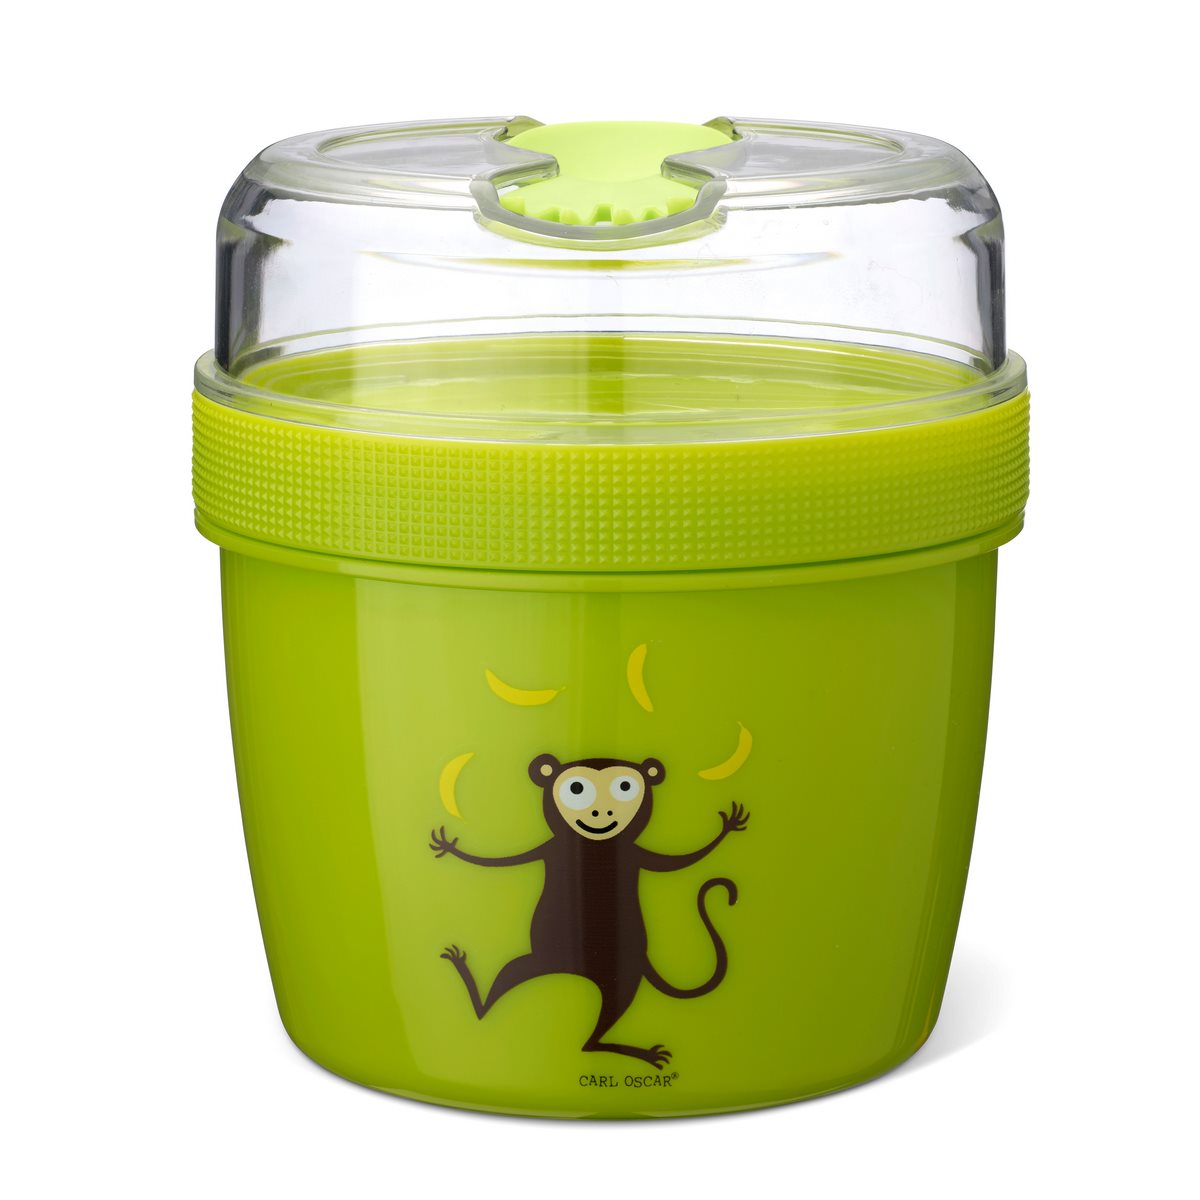 Ланч-бокс с охлаждающим элементом N-ice Cup Monkey, 11,7 см, 13 см, 800 мл, Силикон, Пластик, Carl Oscar, Швеция